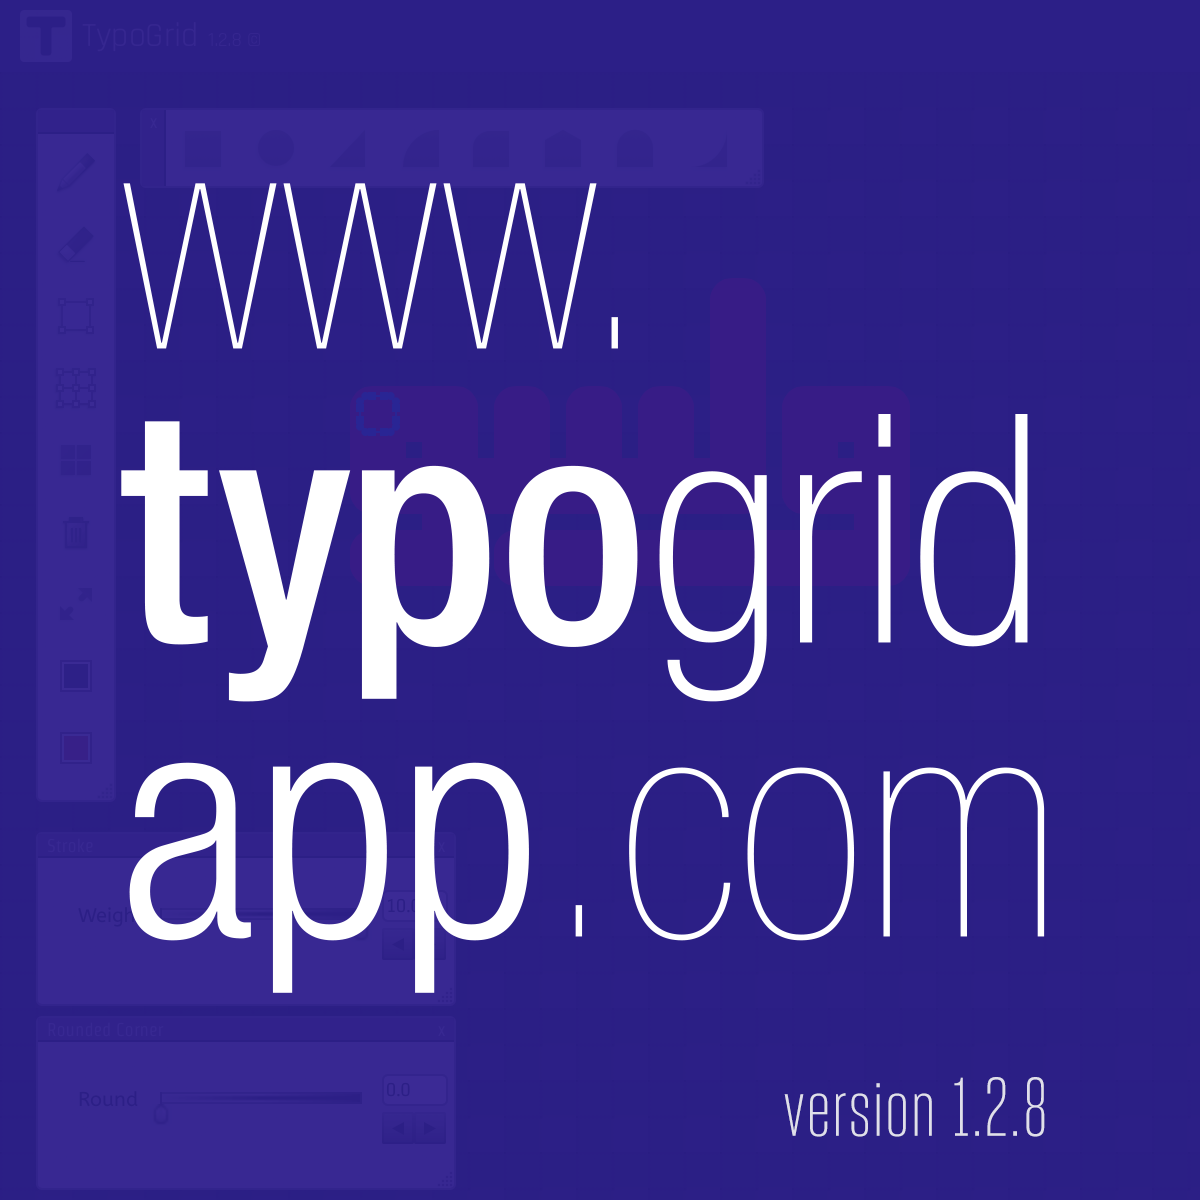 More improvements in version 1.2.8 of typogridapp.com